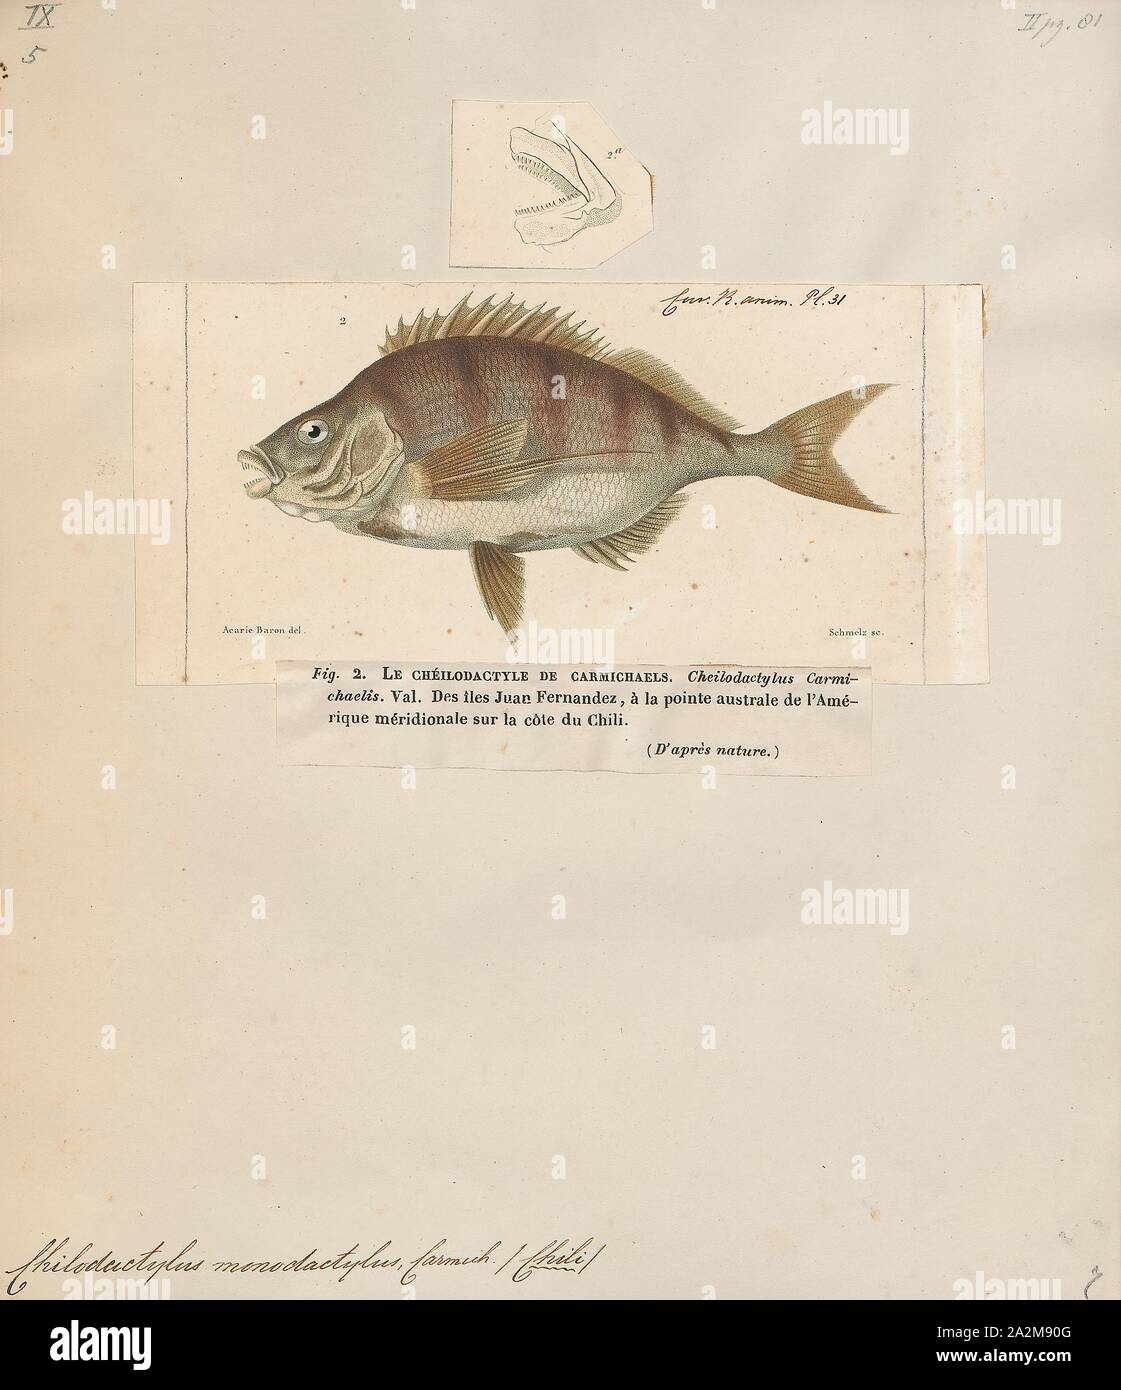 Chilodactylus monodactylus, Print, 1700-1880 Stock Photo